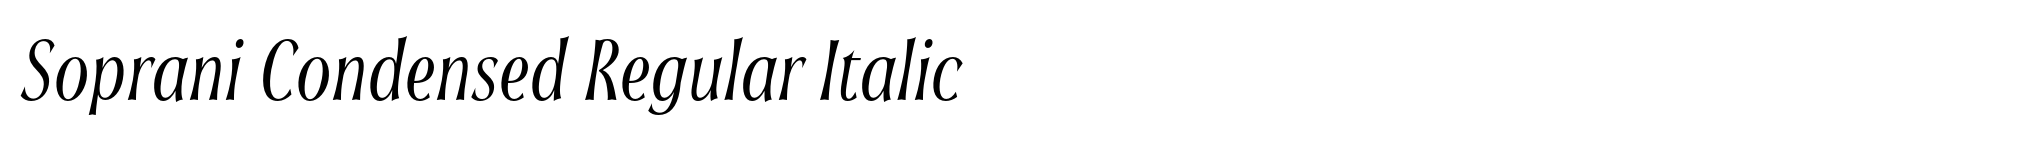 Soprani Condensed Regular Italic image